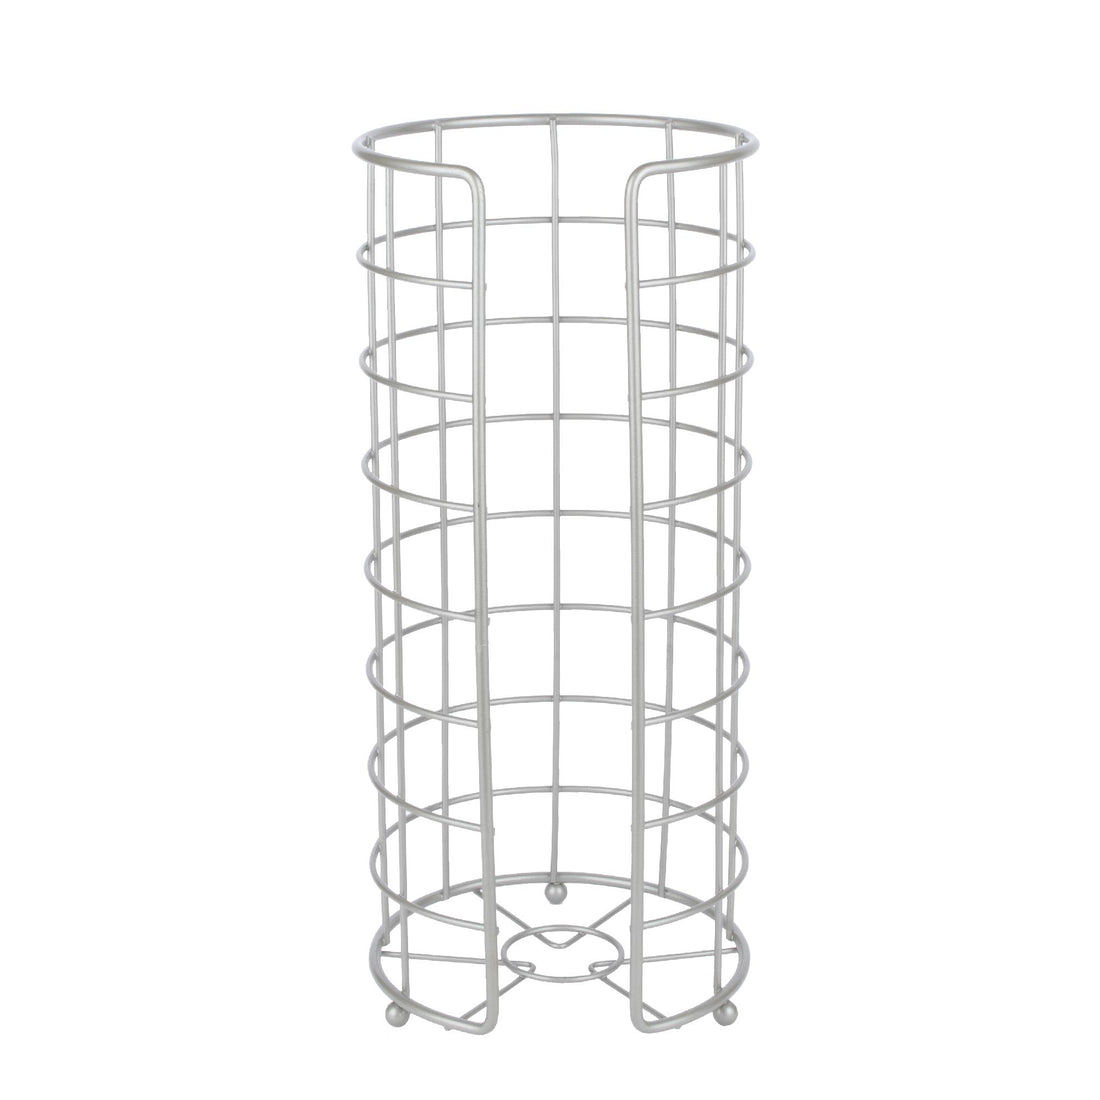 Freestanding Wire Frame Toilet Paper Holder (Brushed Nickel Finish) - Utility sinks vanites Tehila